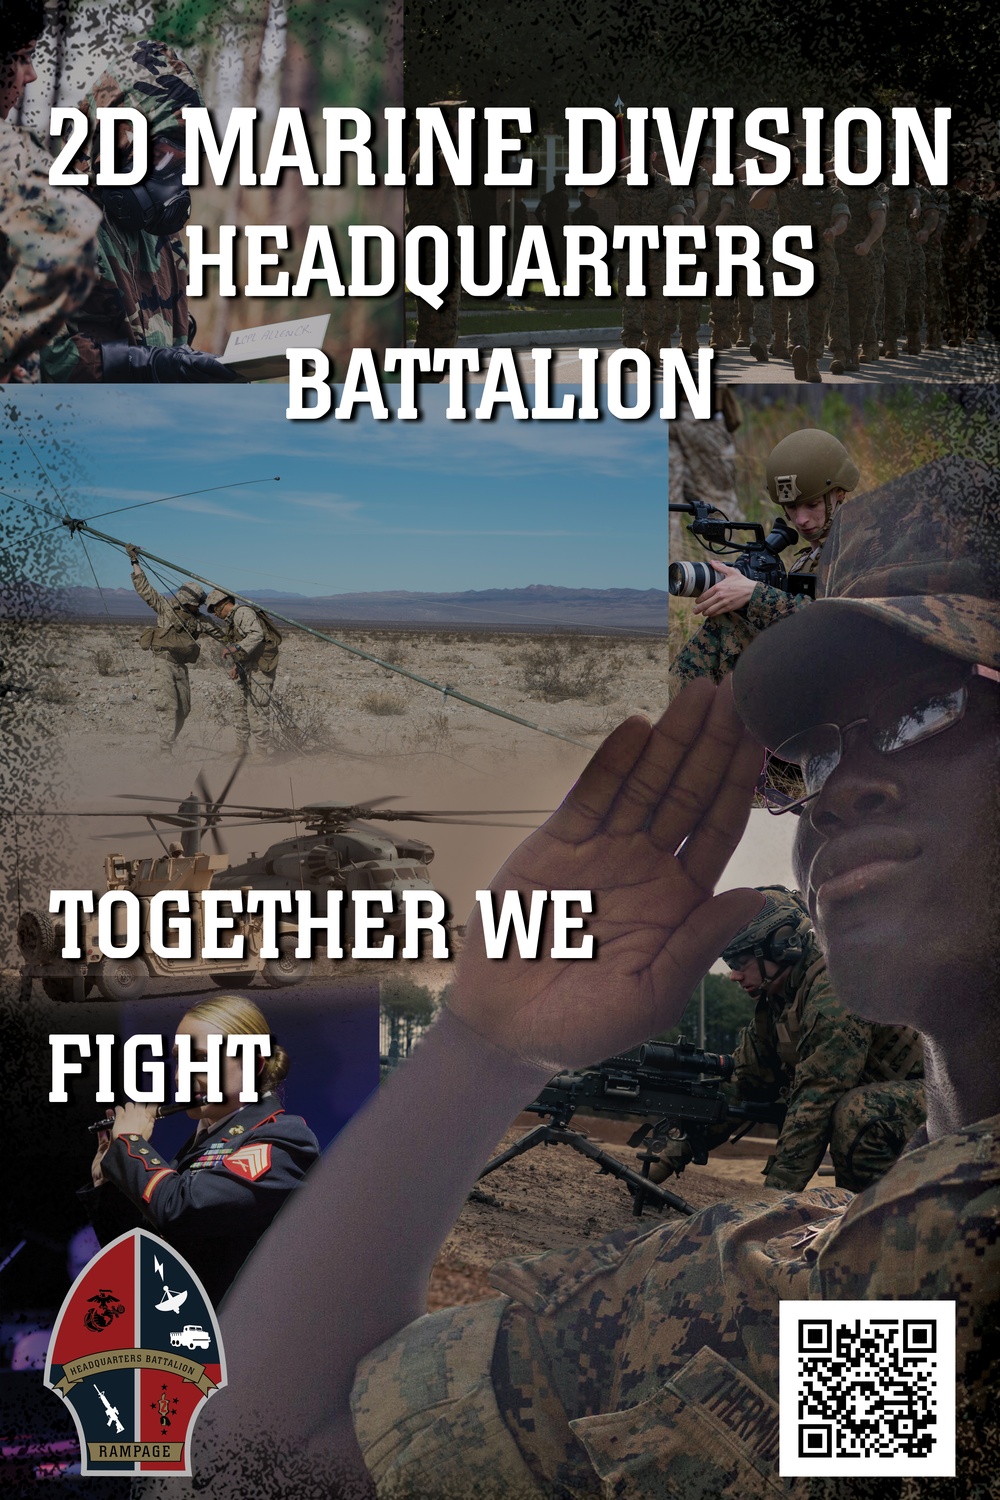 Battalion Posters